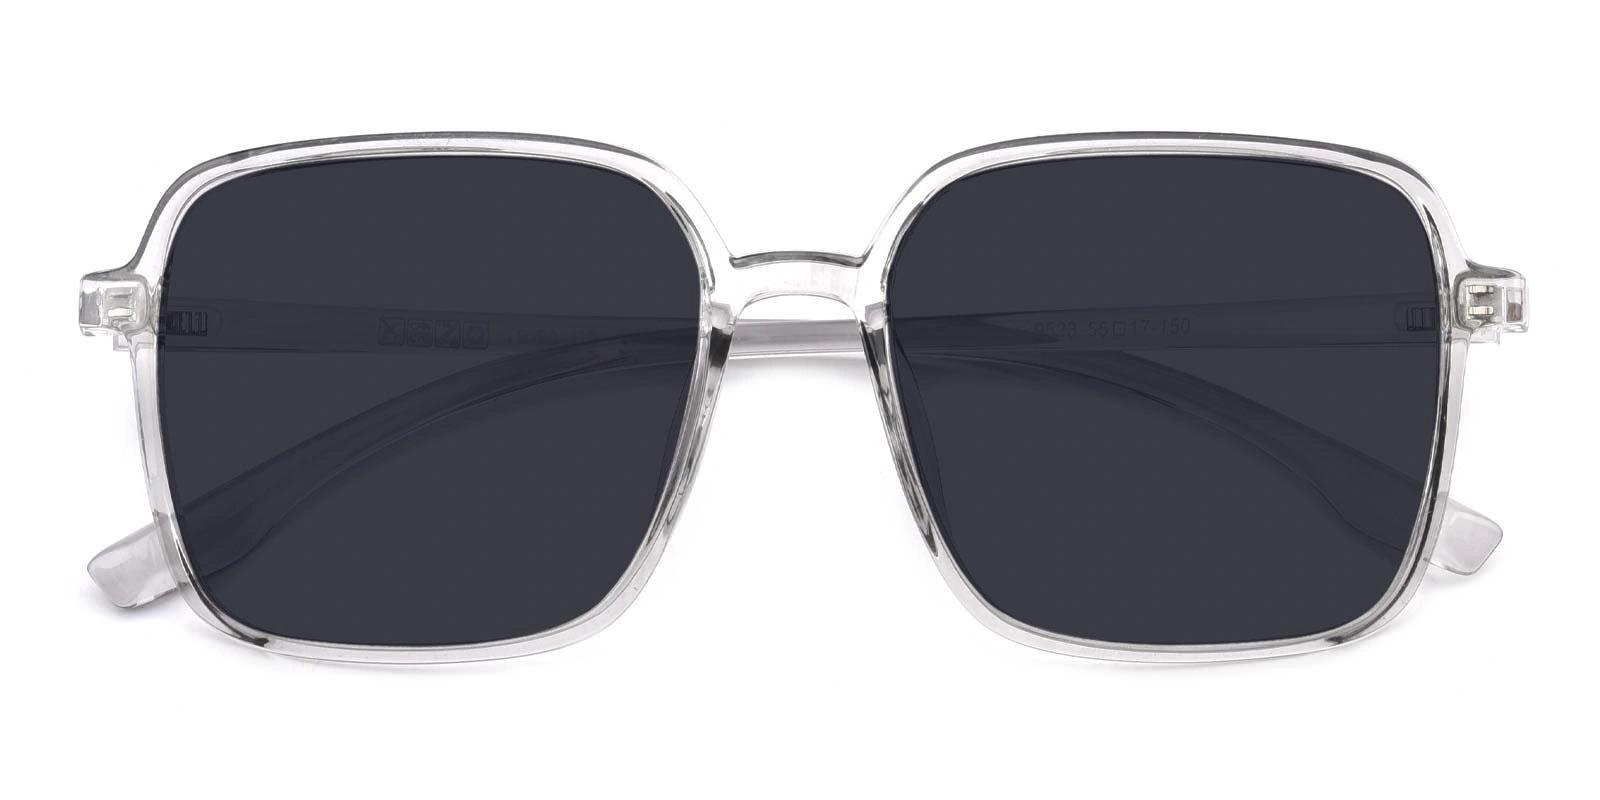 Rapaciade Gray Plastic Lightweight , Sunglasses , UniversalBridgeFit Frames from ABBE Glasses